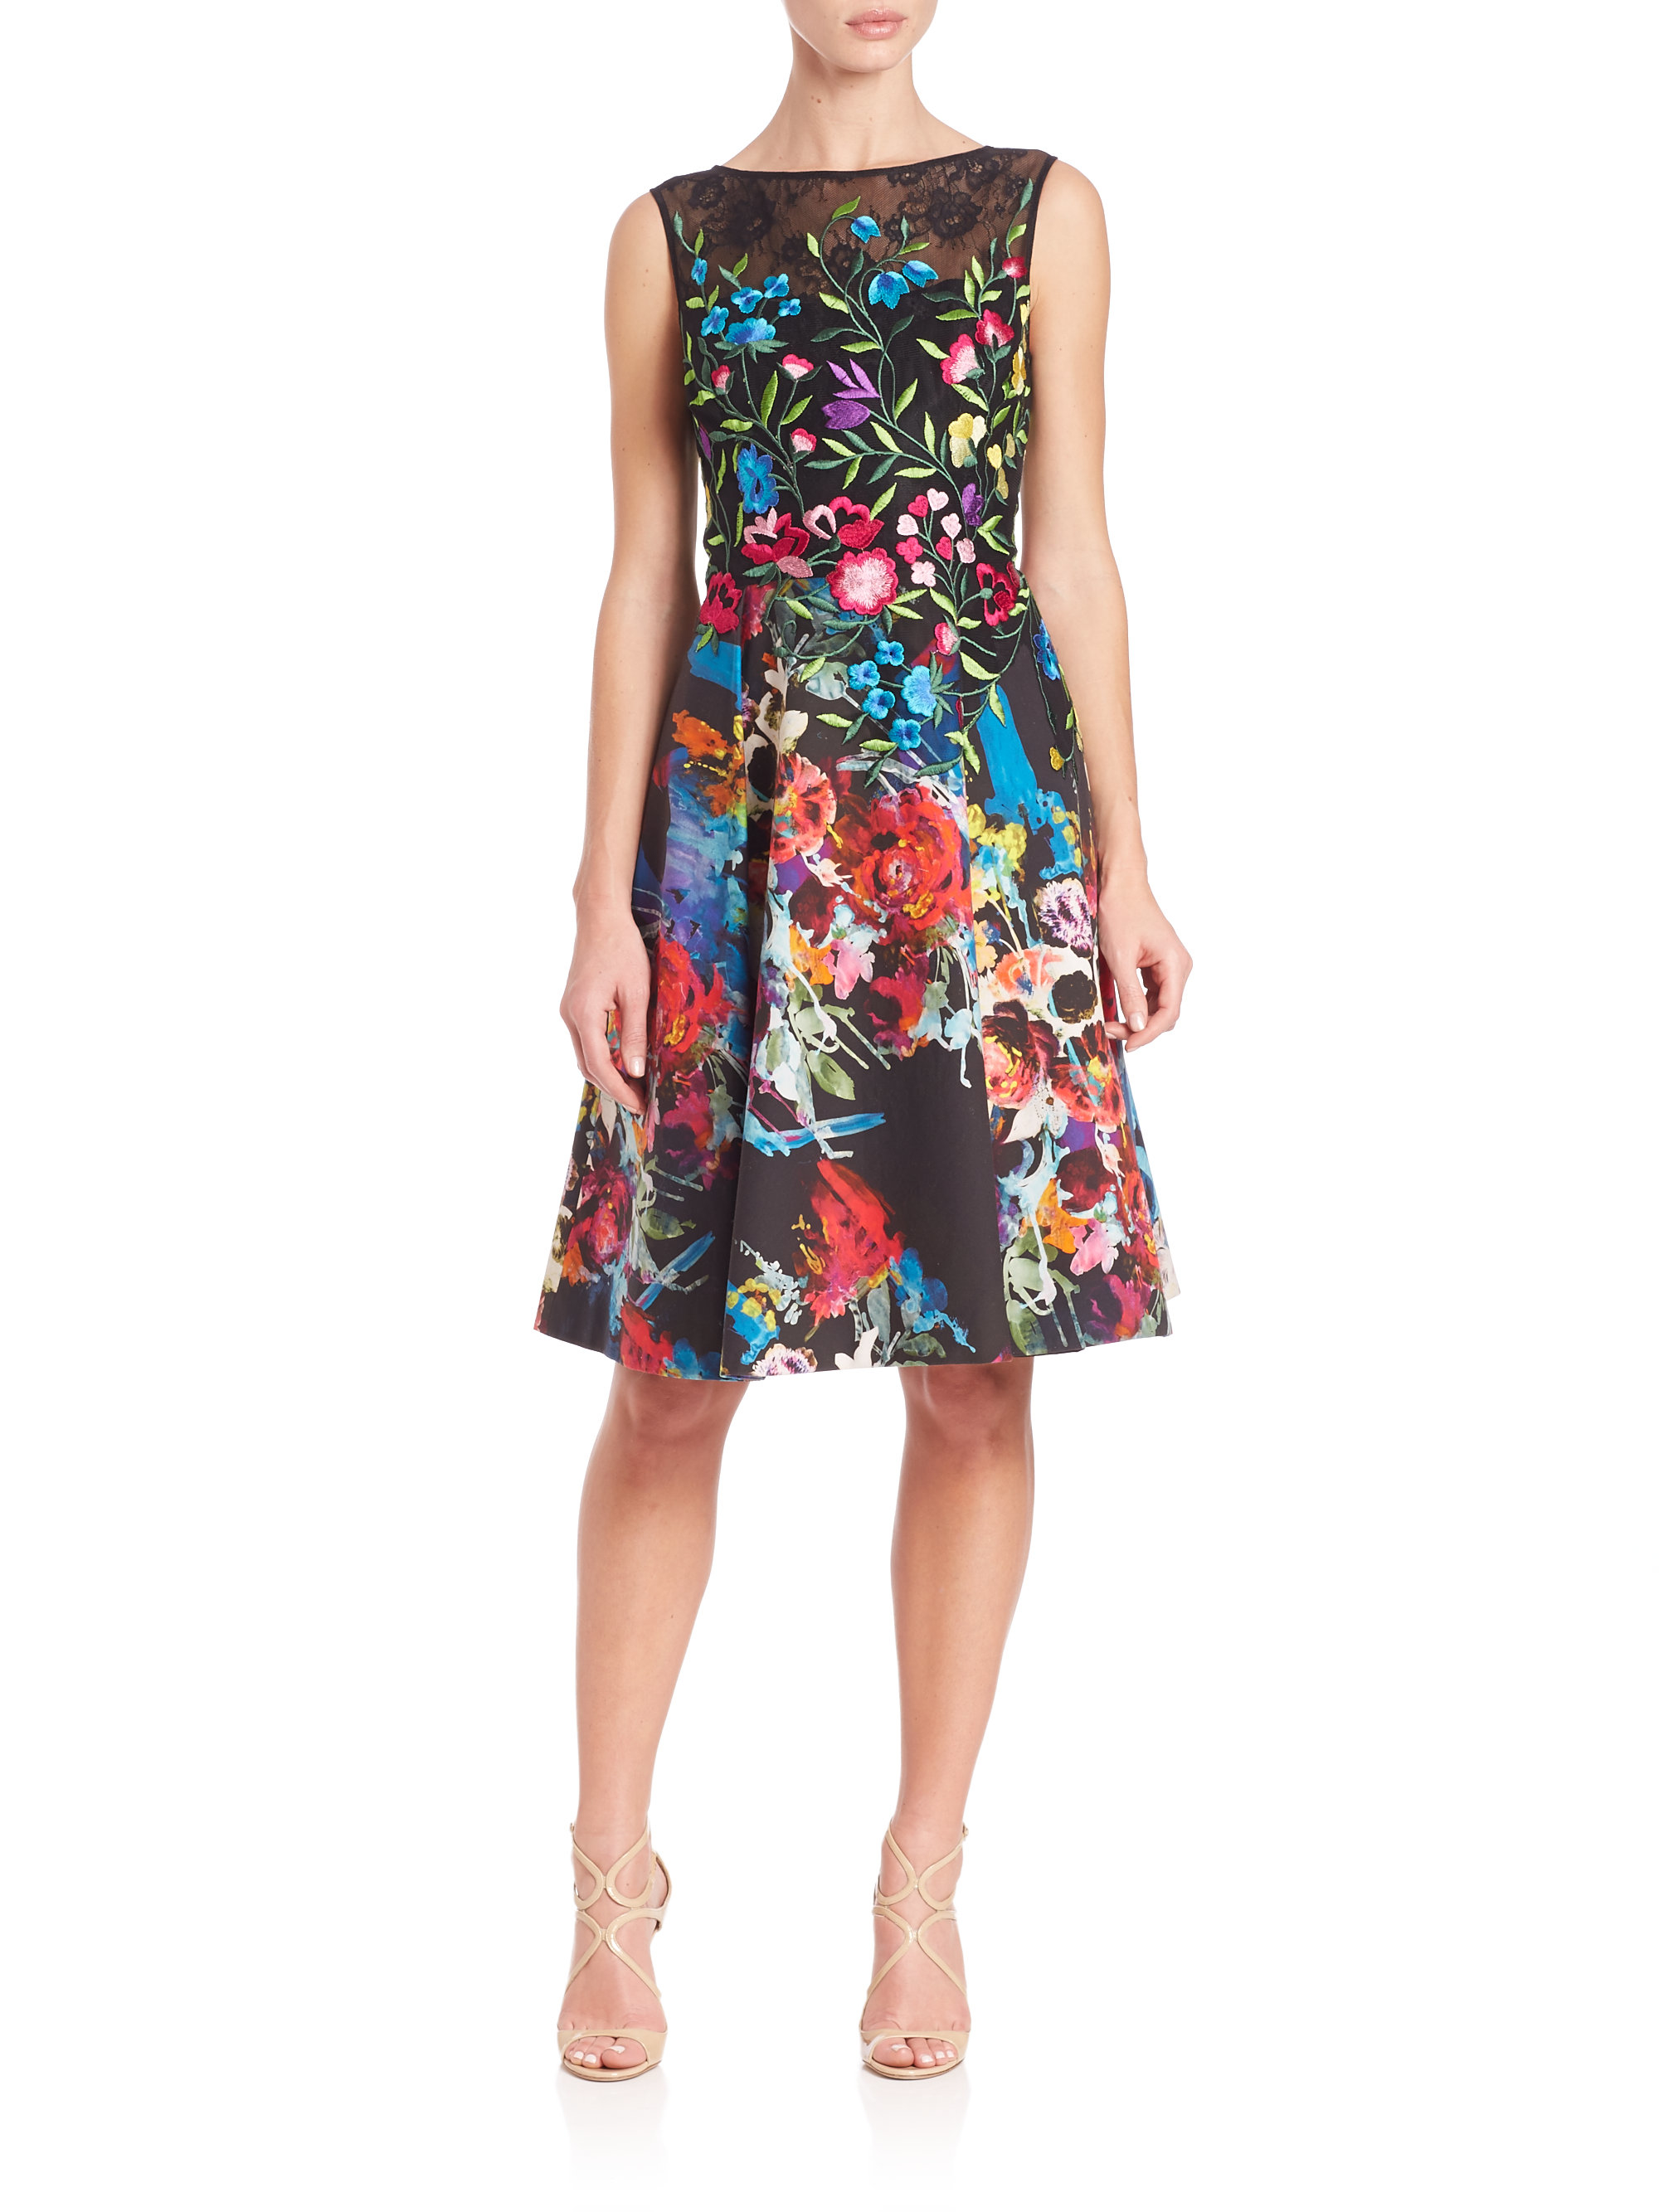 Lyst - Teri Jon Embroidered Floral Dress